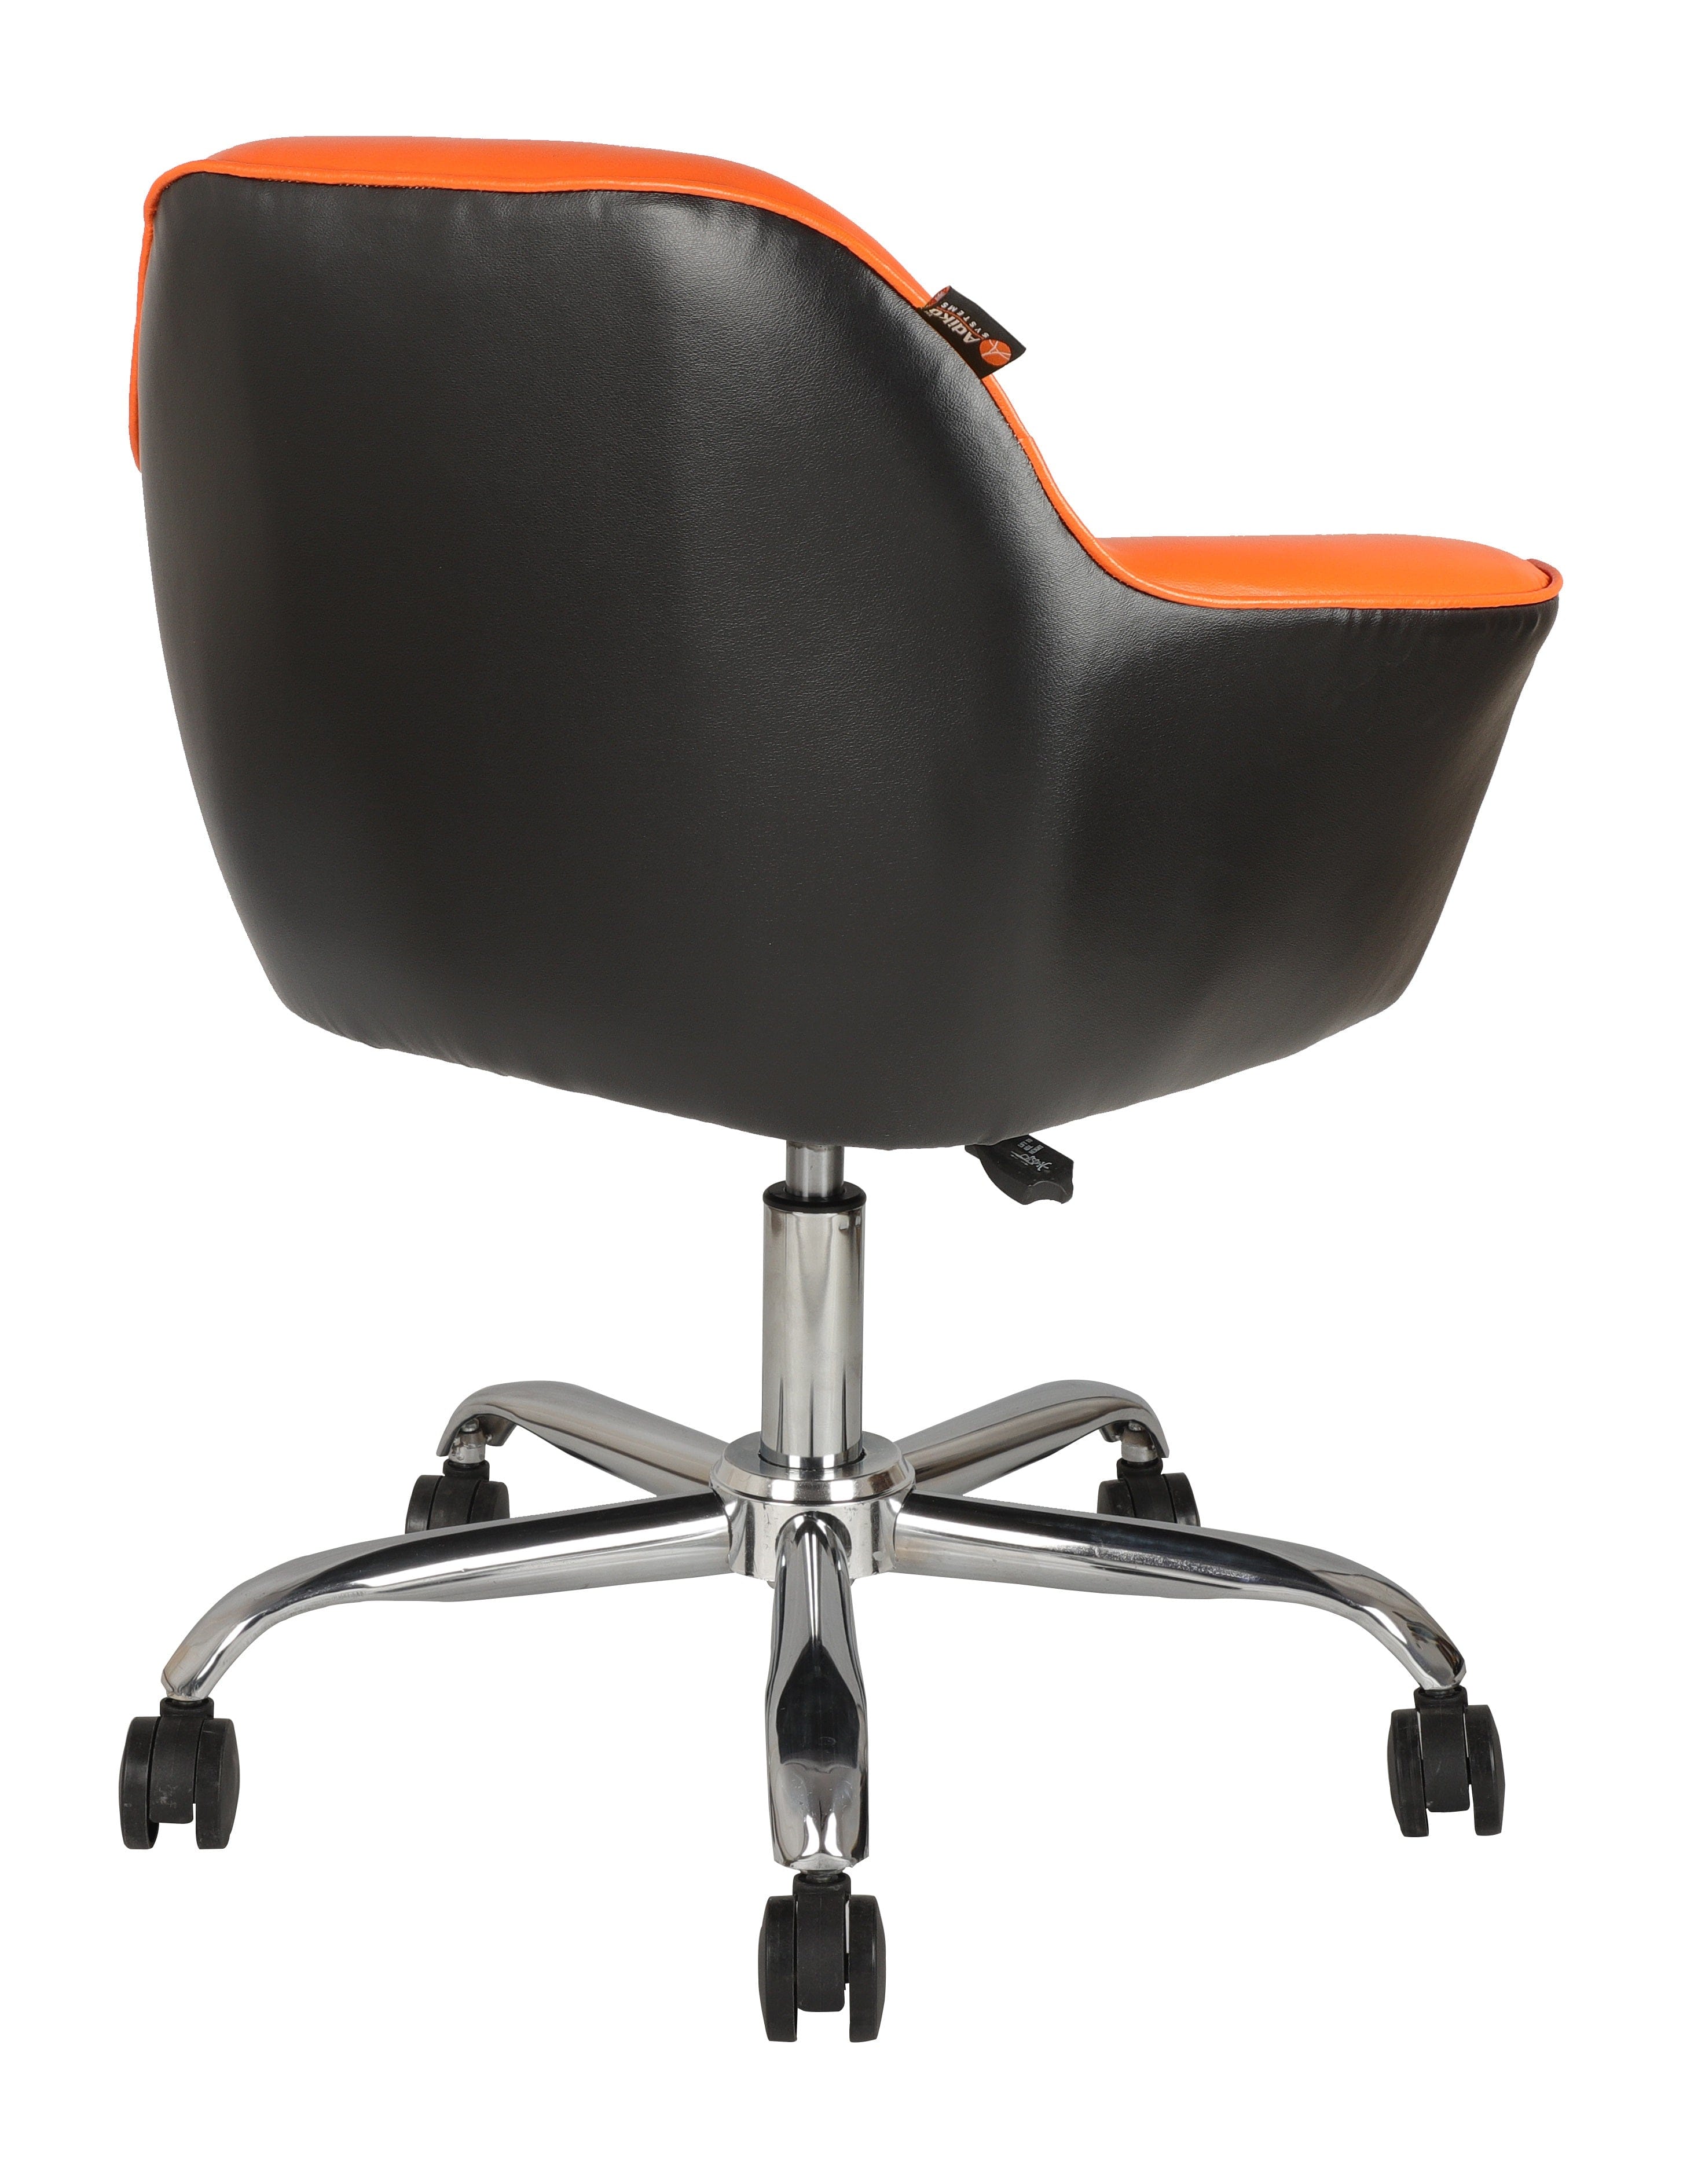 Adiko Lounge Chair in Orange / Black Color